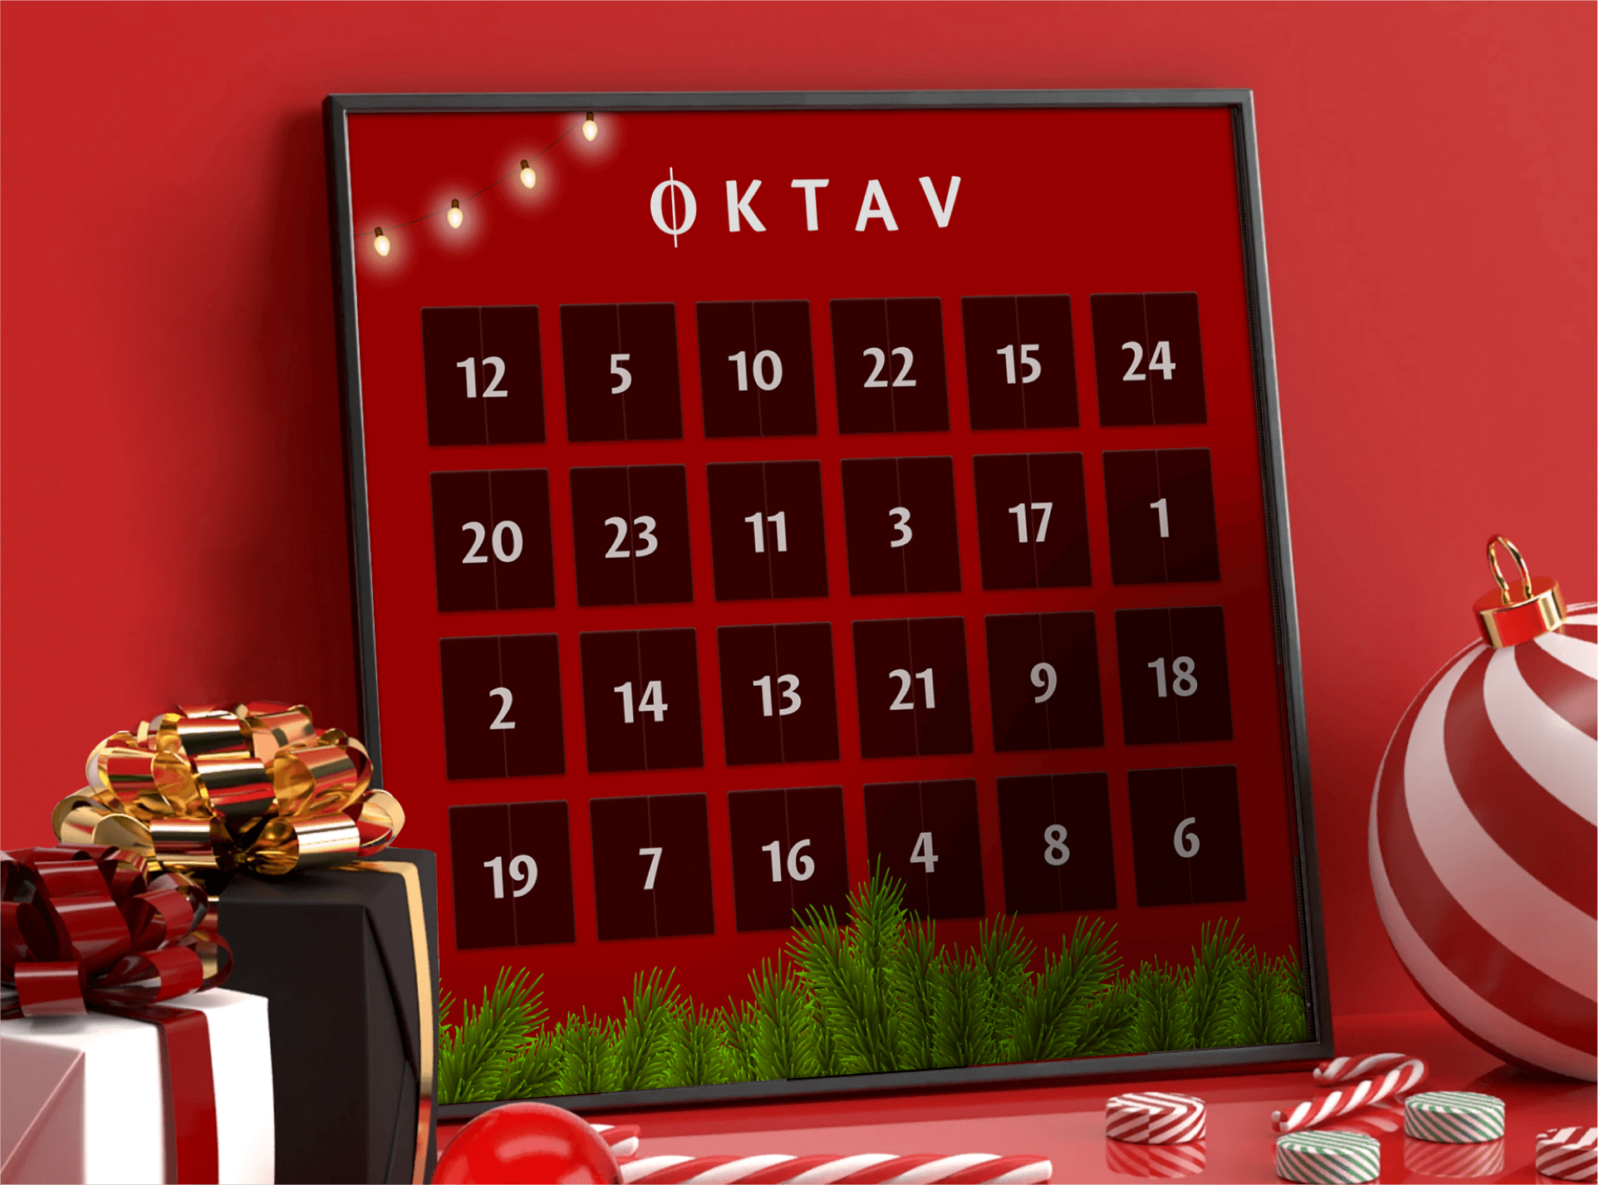 OKTAV advent calendar